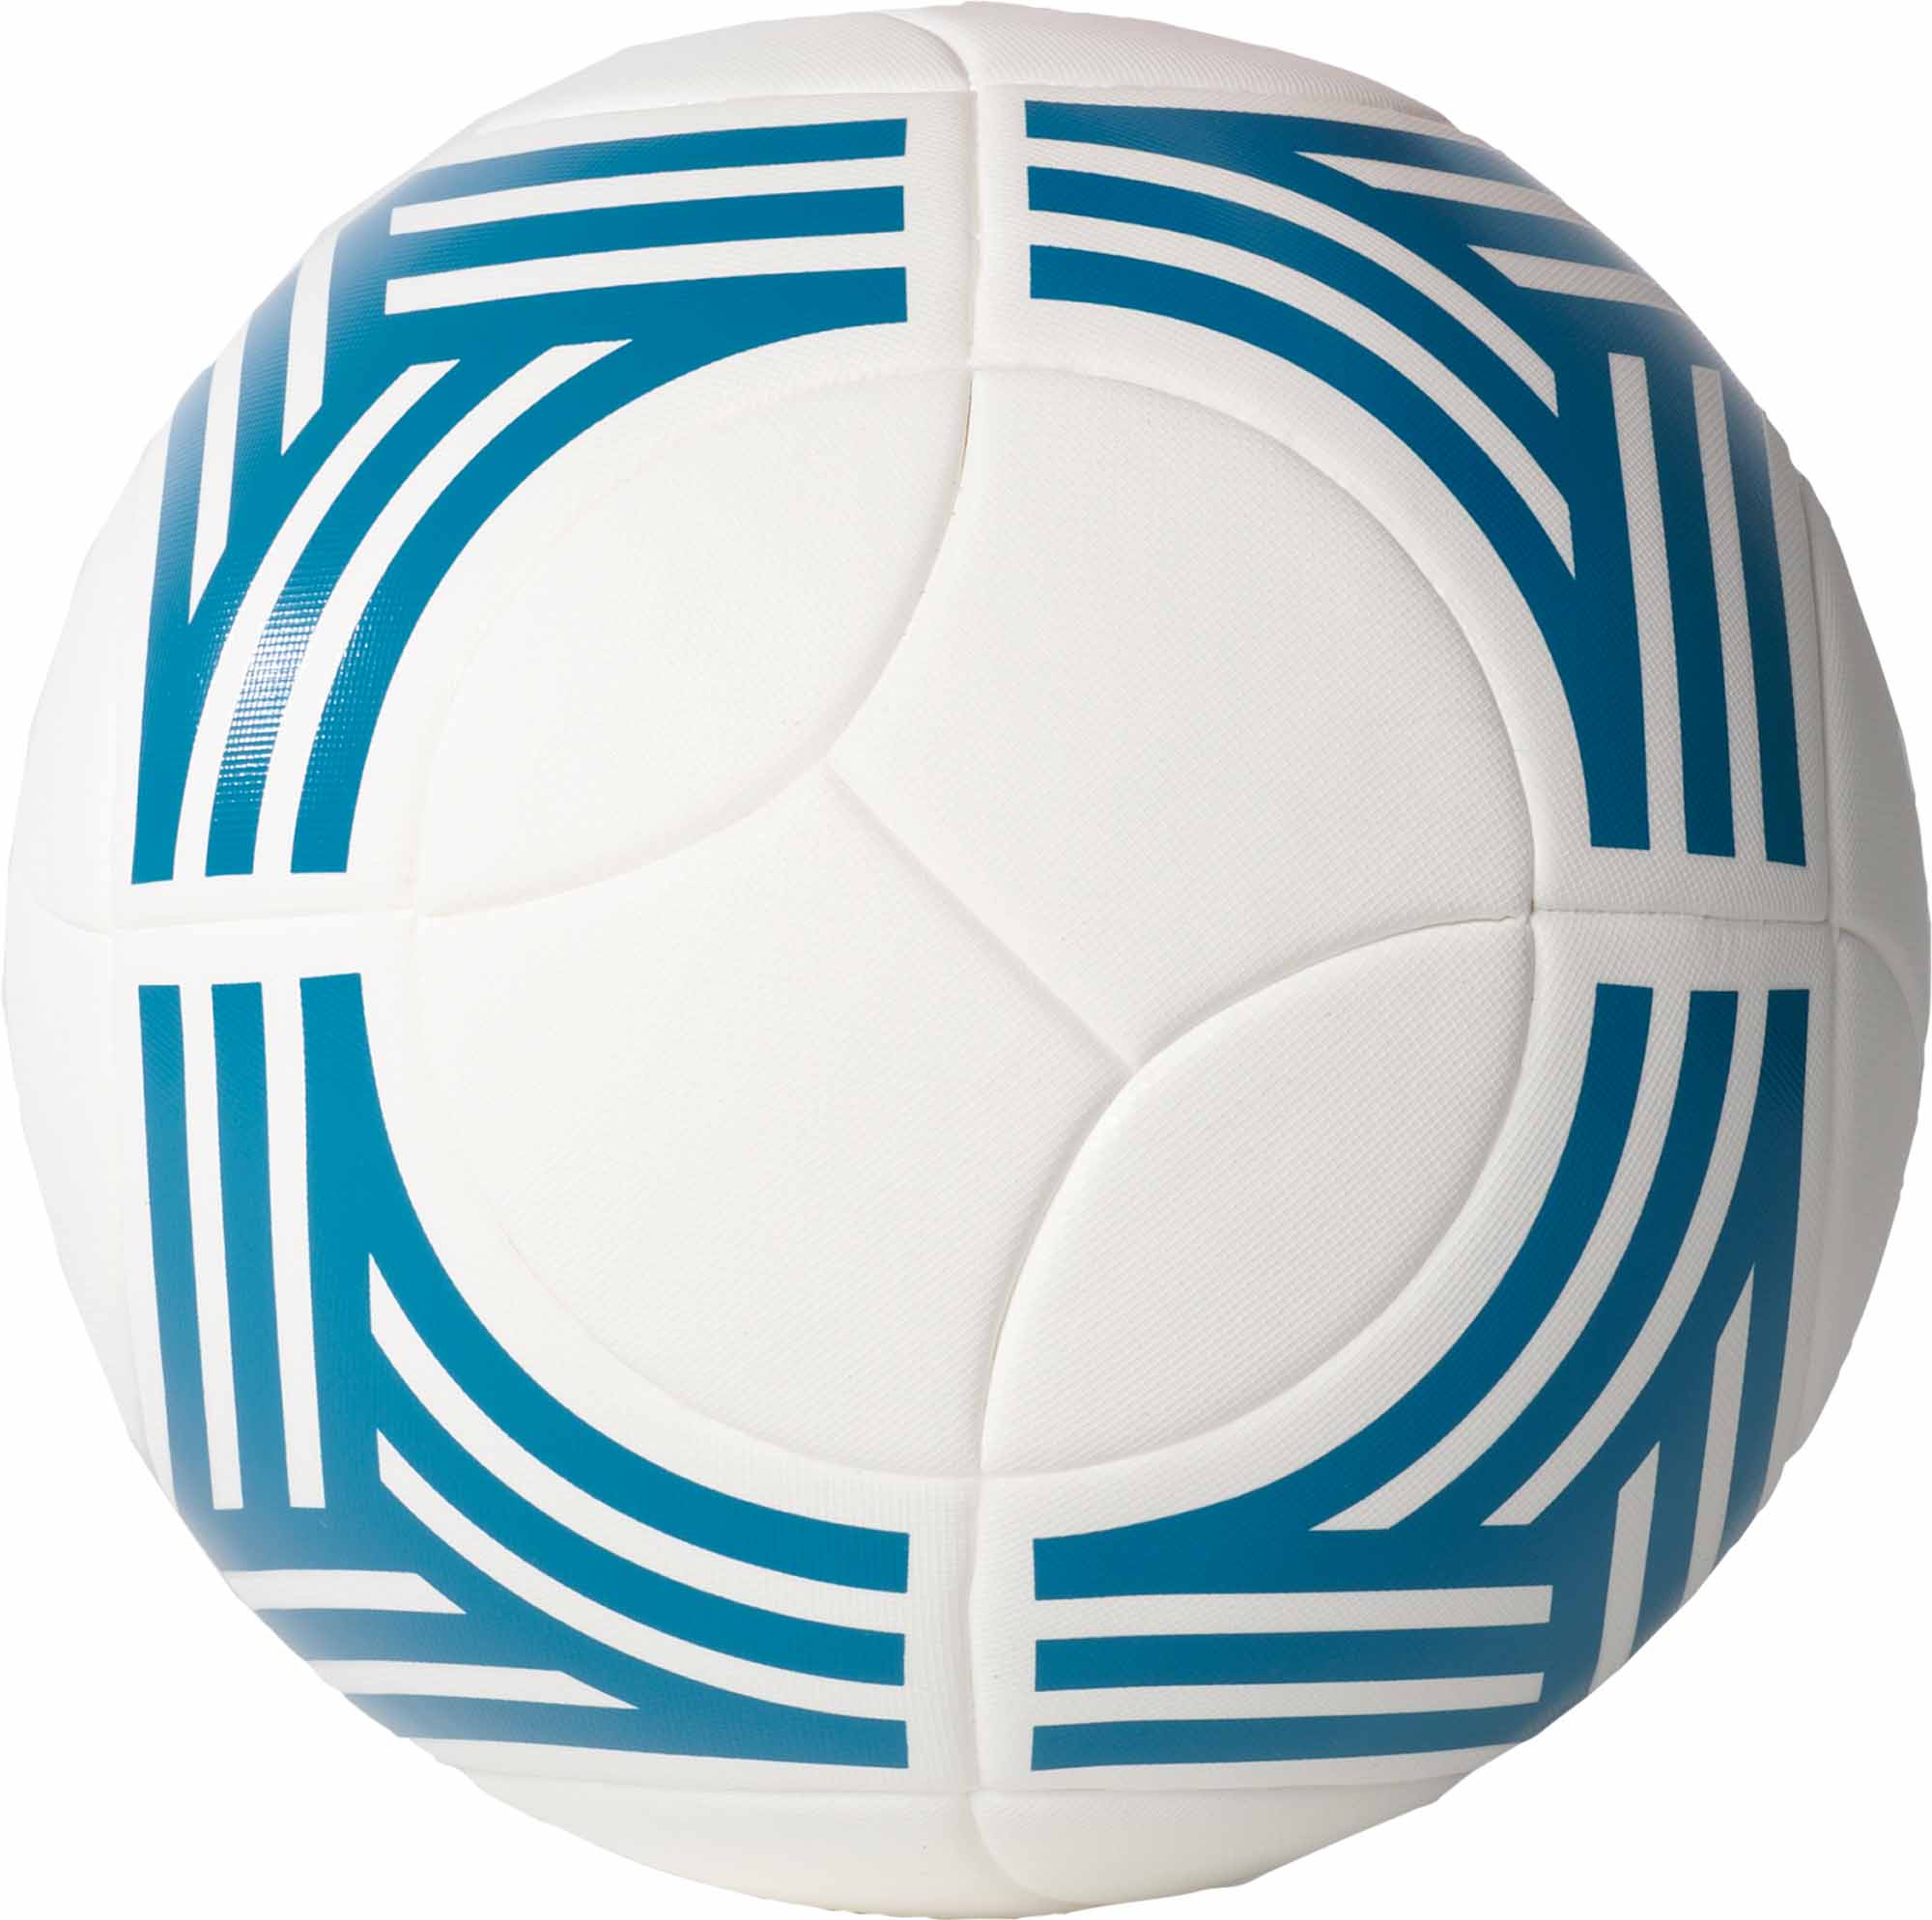 Leonardoda is there Inhale adidas Tango Luxe Match Soccer Ball - SoccerPro